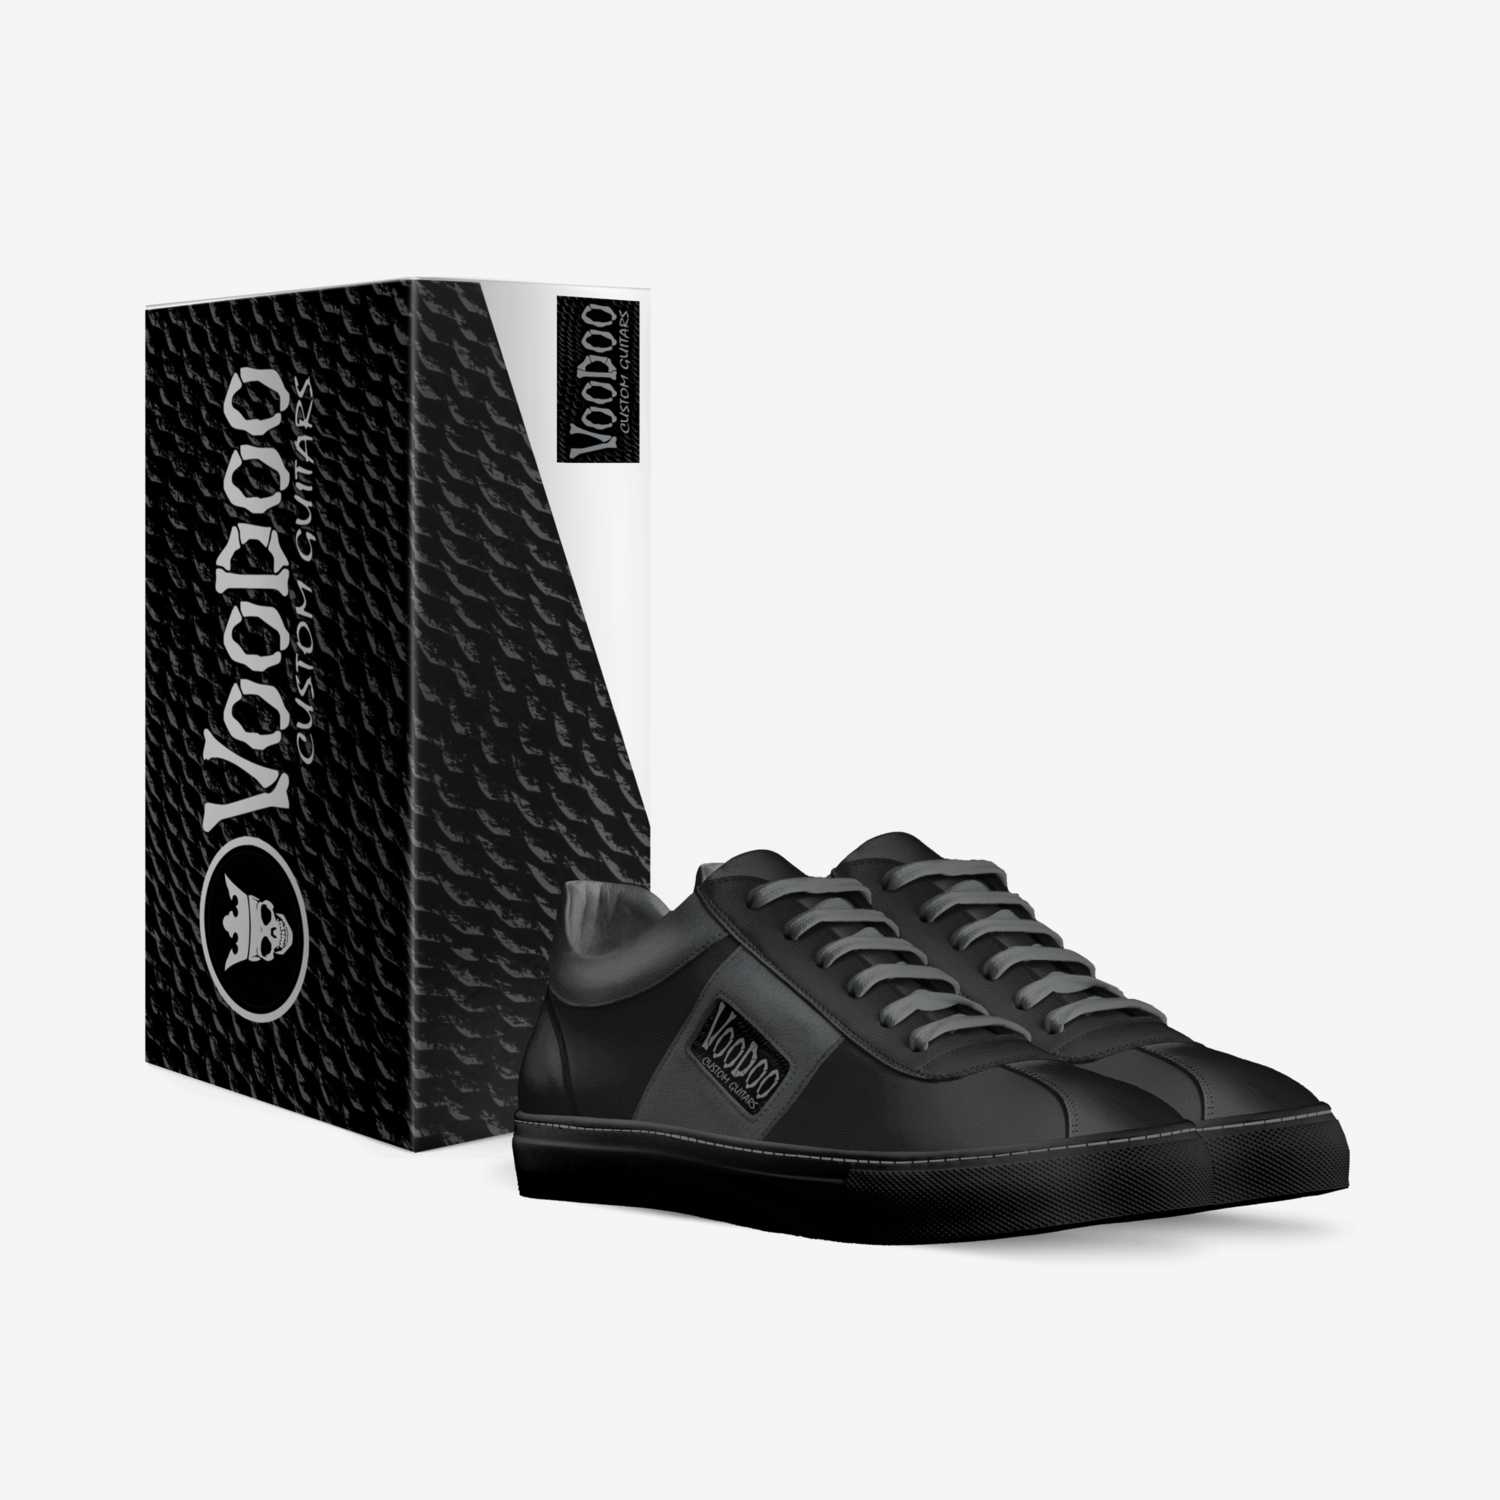 Voodoo custom made in Italy shoes by Voodoo Custom Guitars | Box view